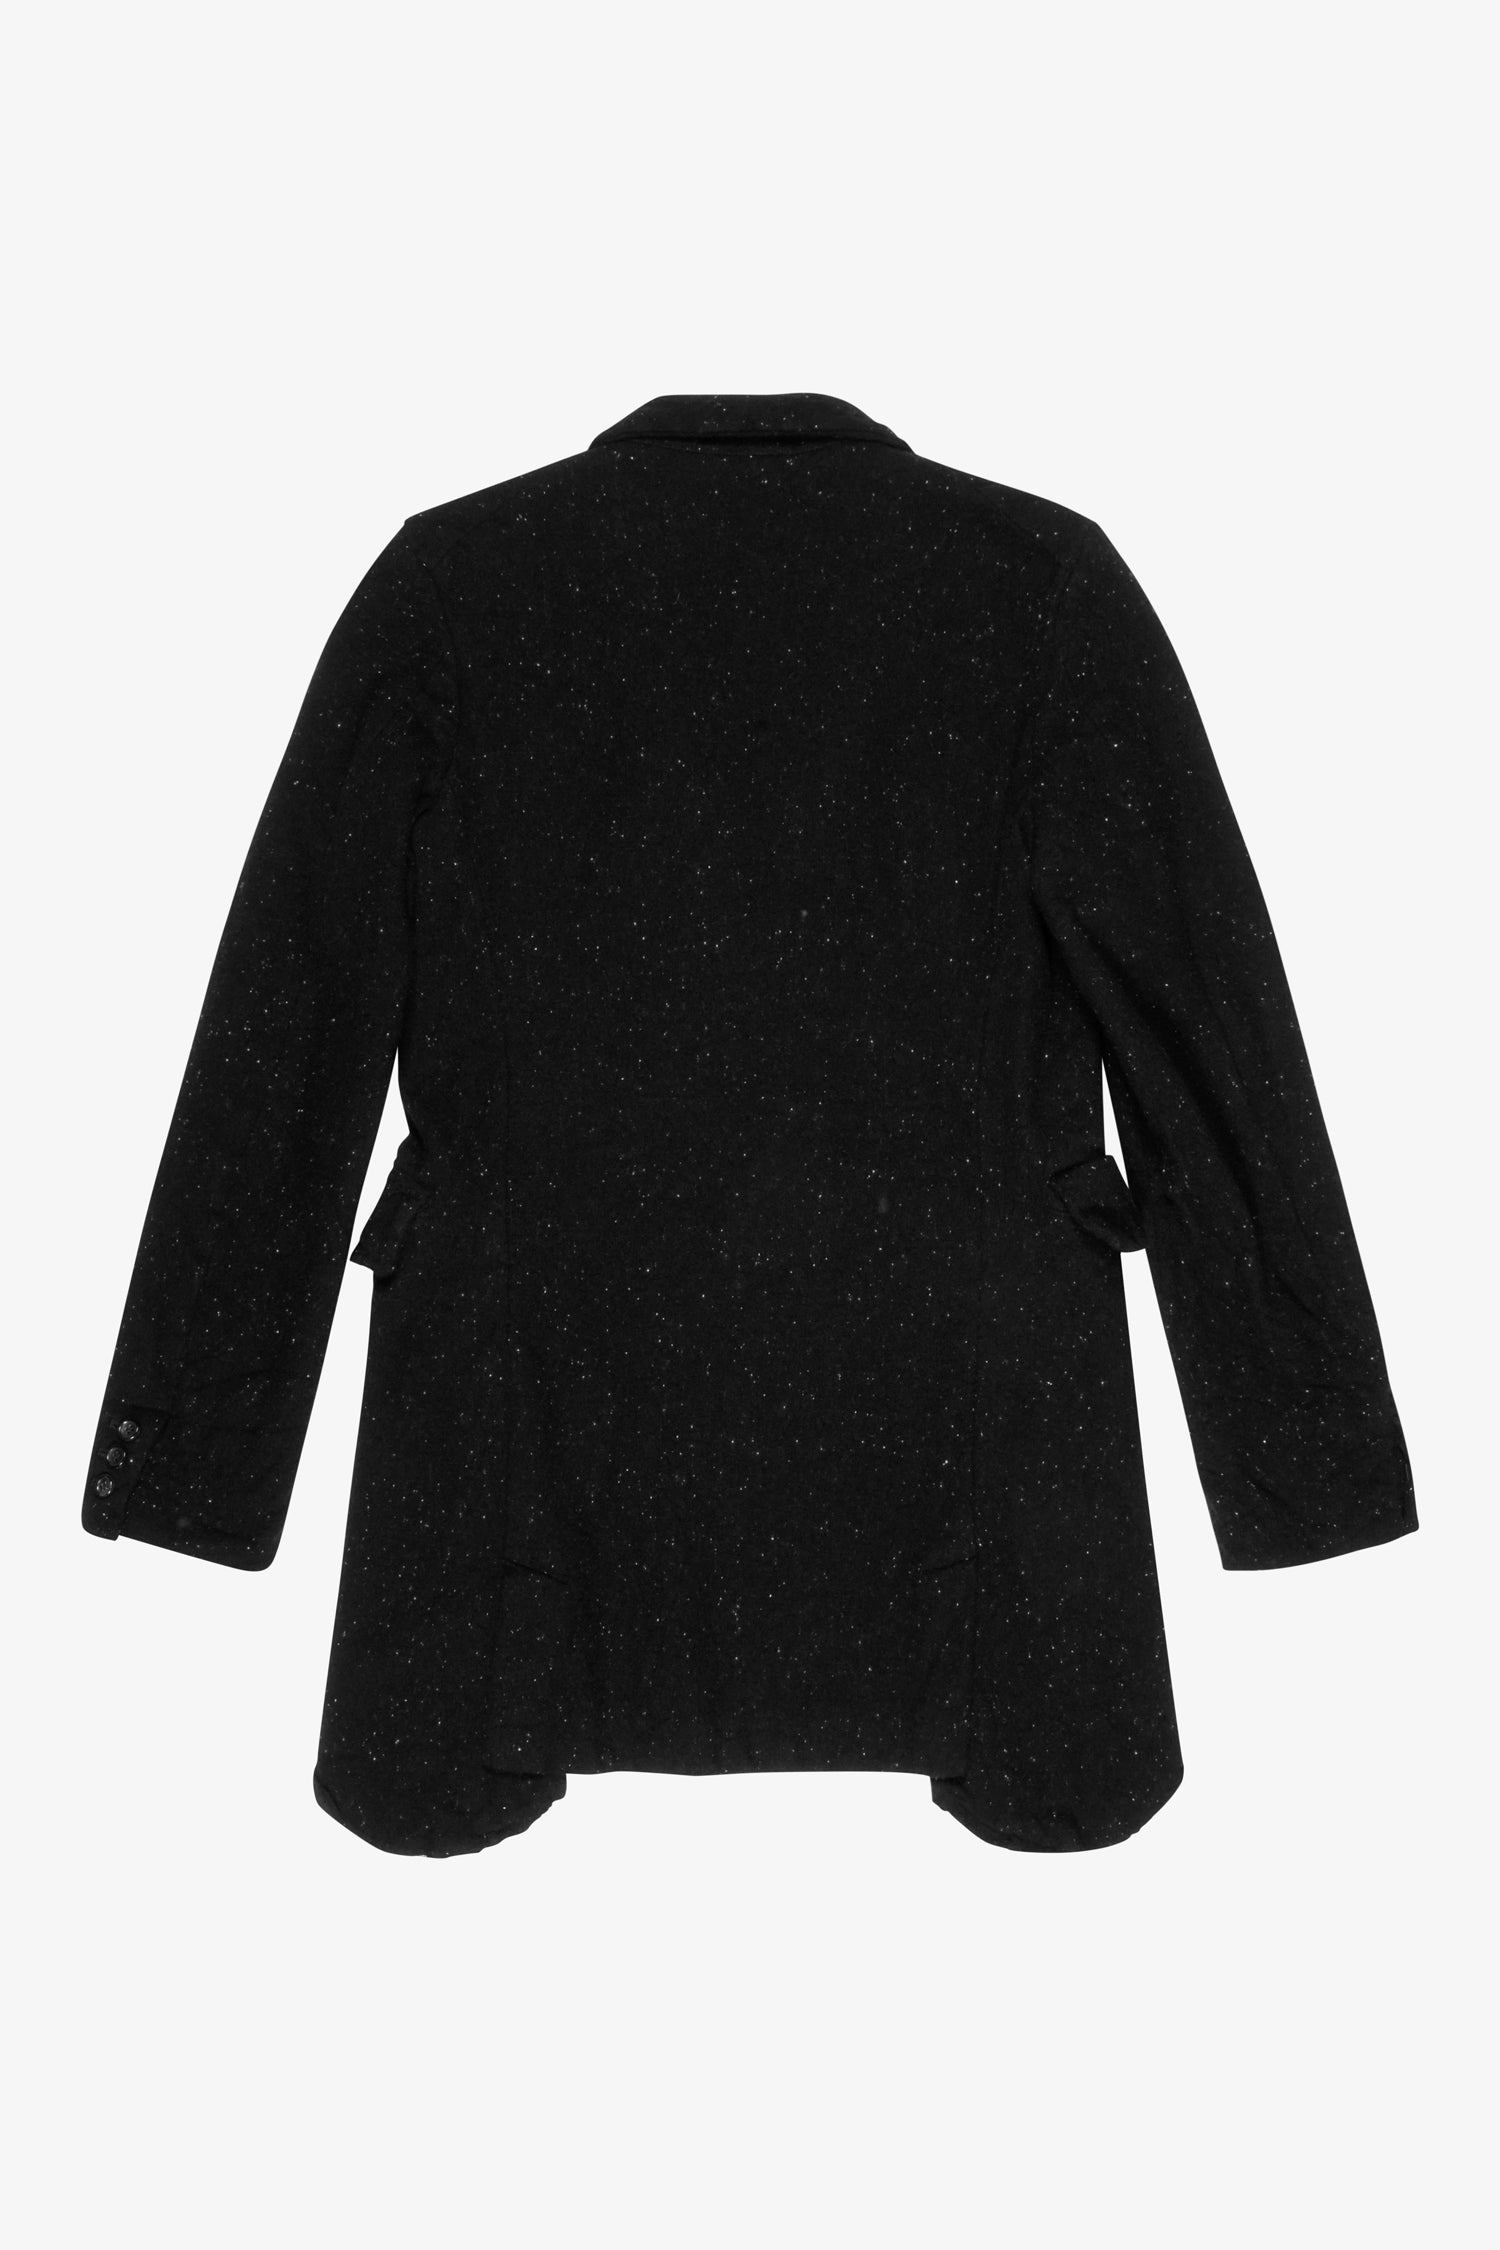 Selectshop FRAME - COMME DES GARCONS BLACK Single-Breasted Wool Blazer Outerwear Dubai